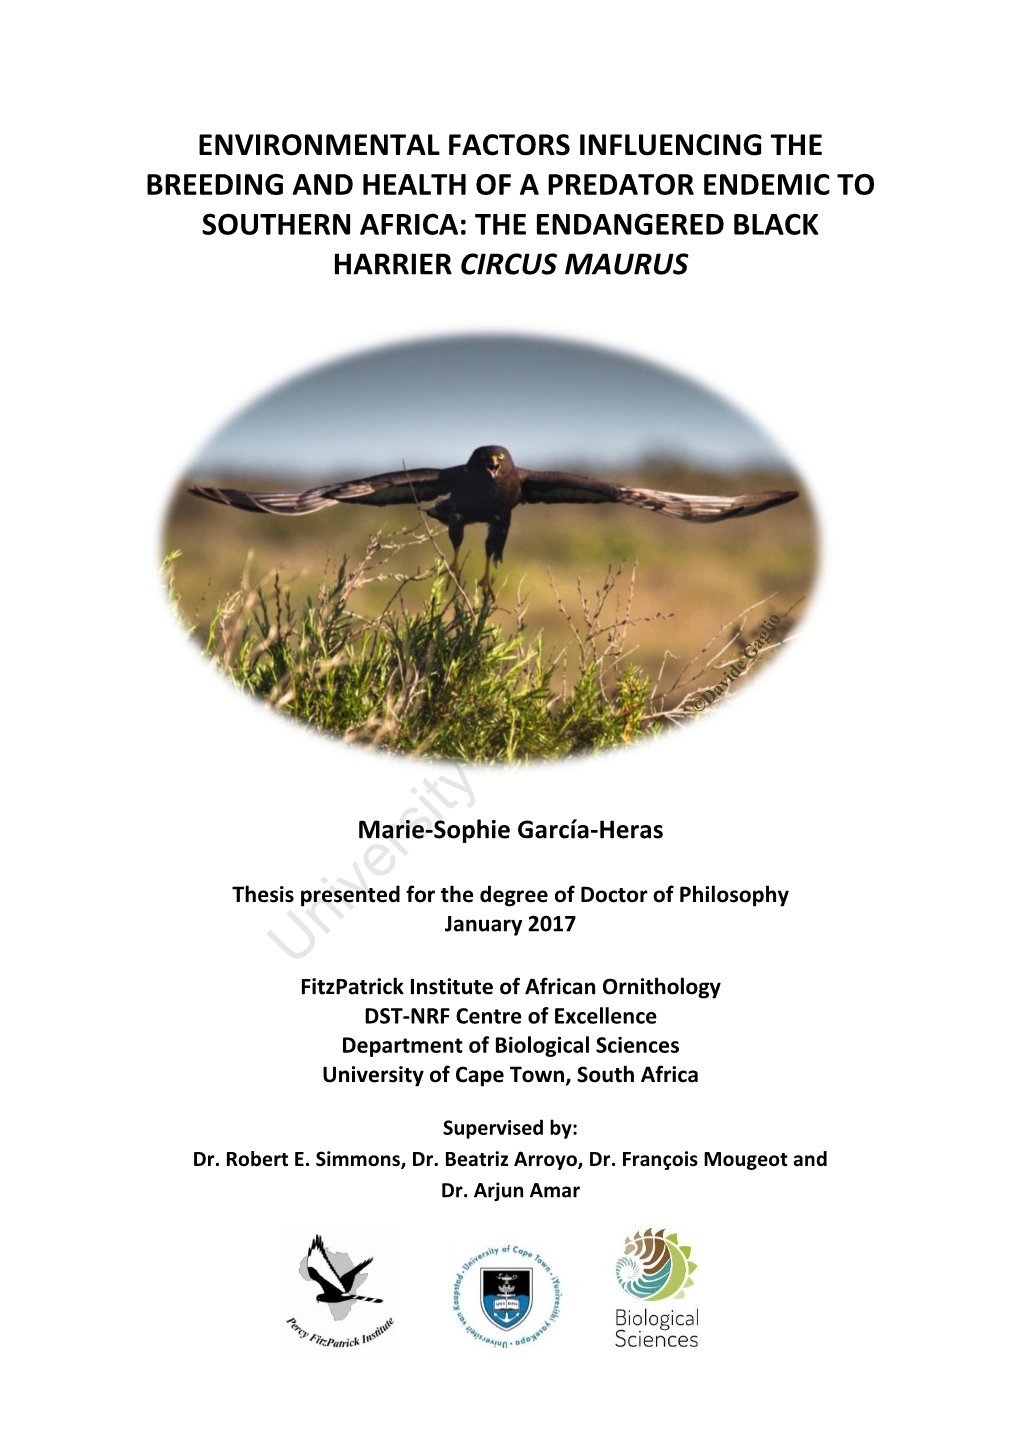 The Endangered Black Harrier Circus Maurus